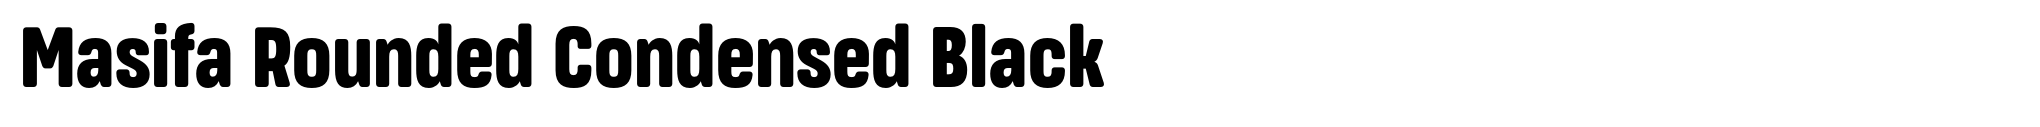 Masifa Rounded Condensed Black image